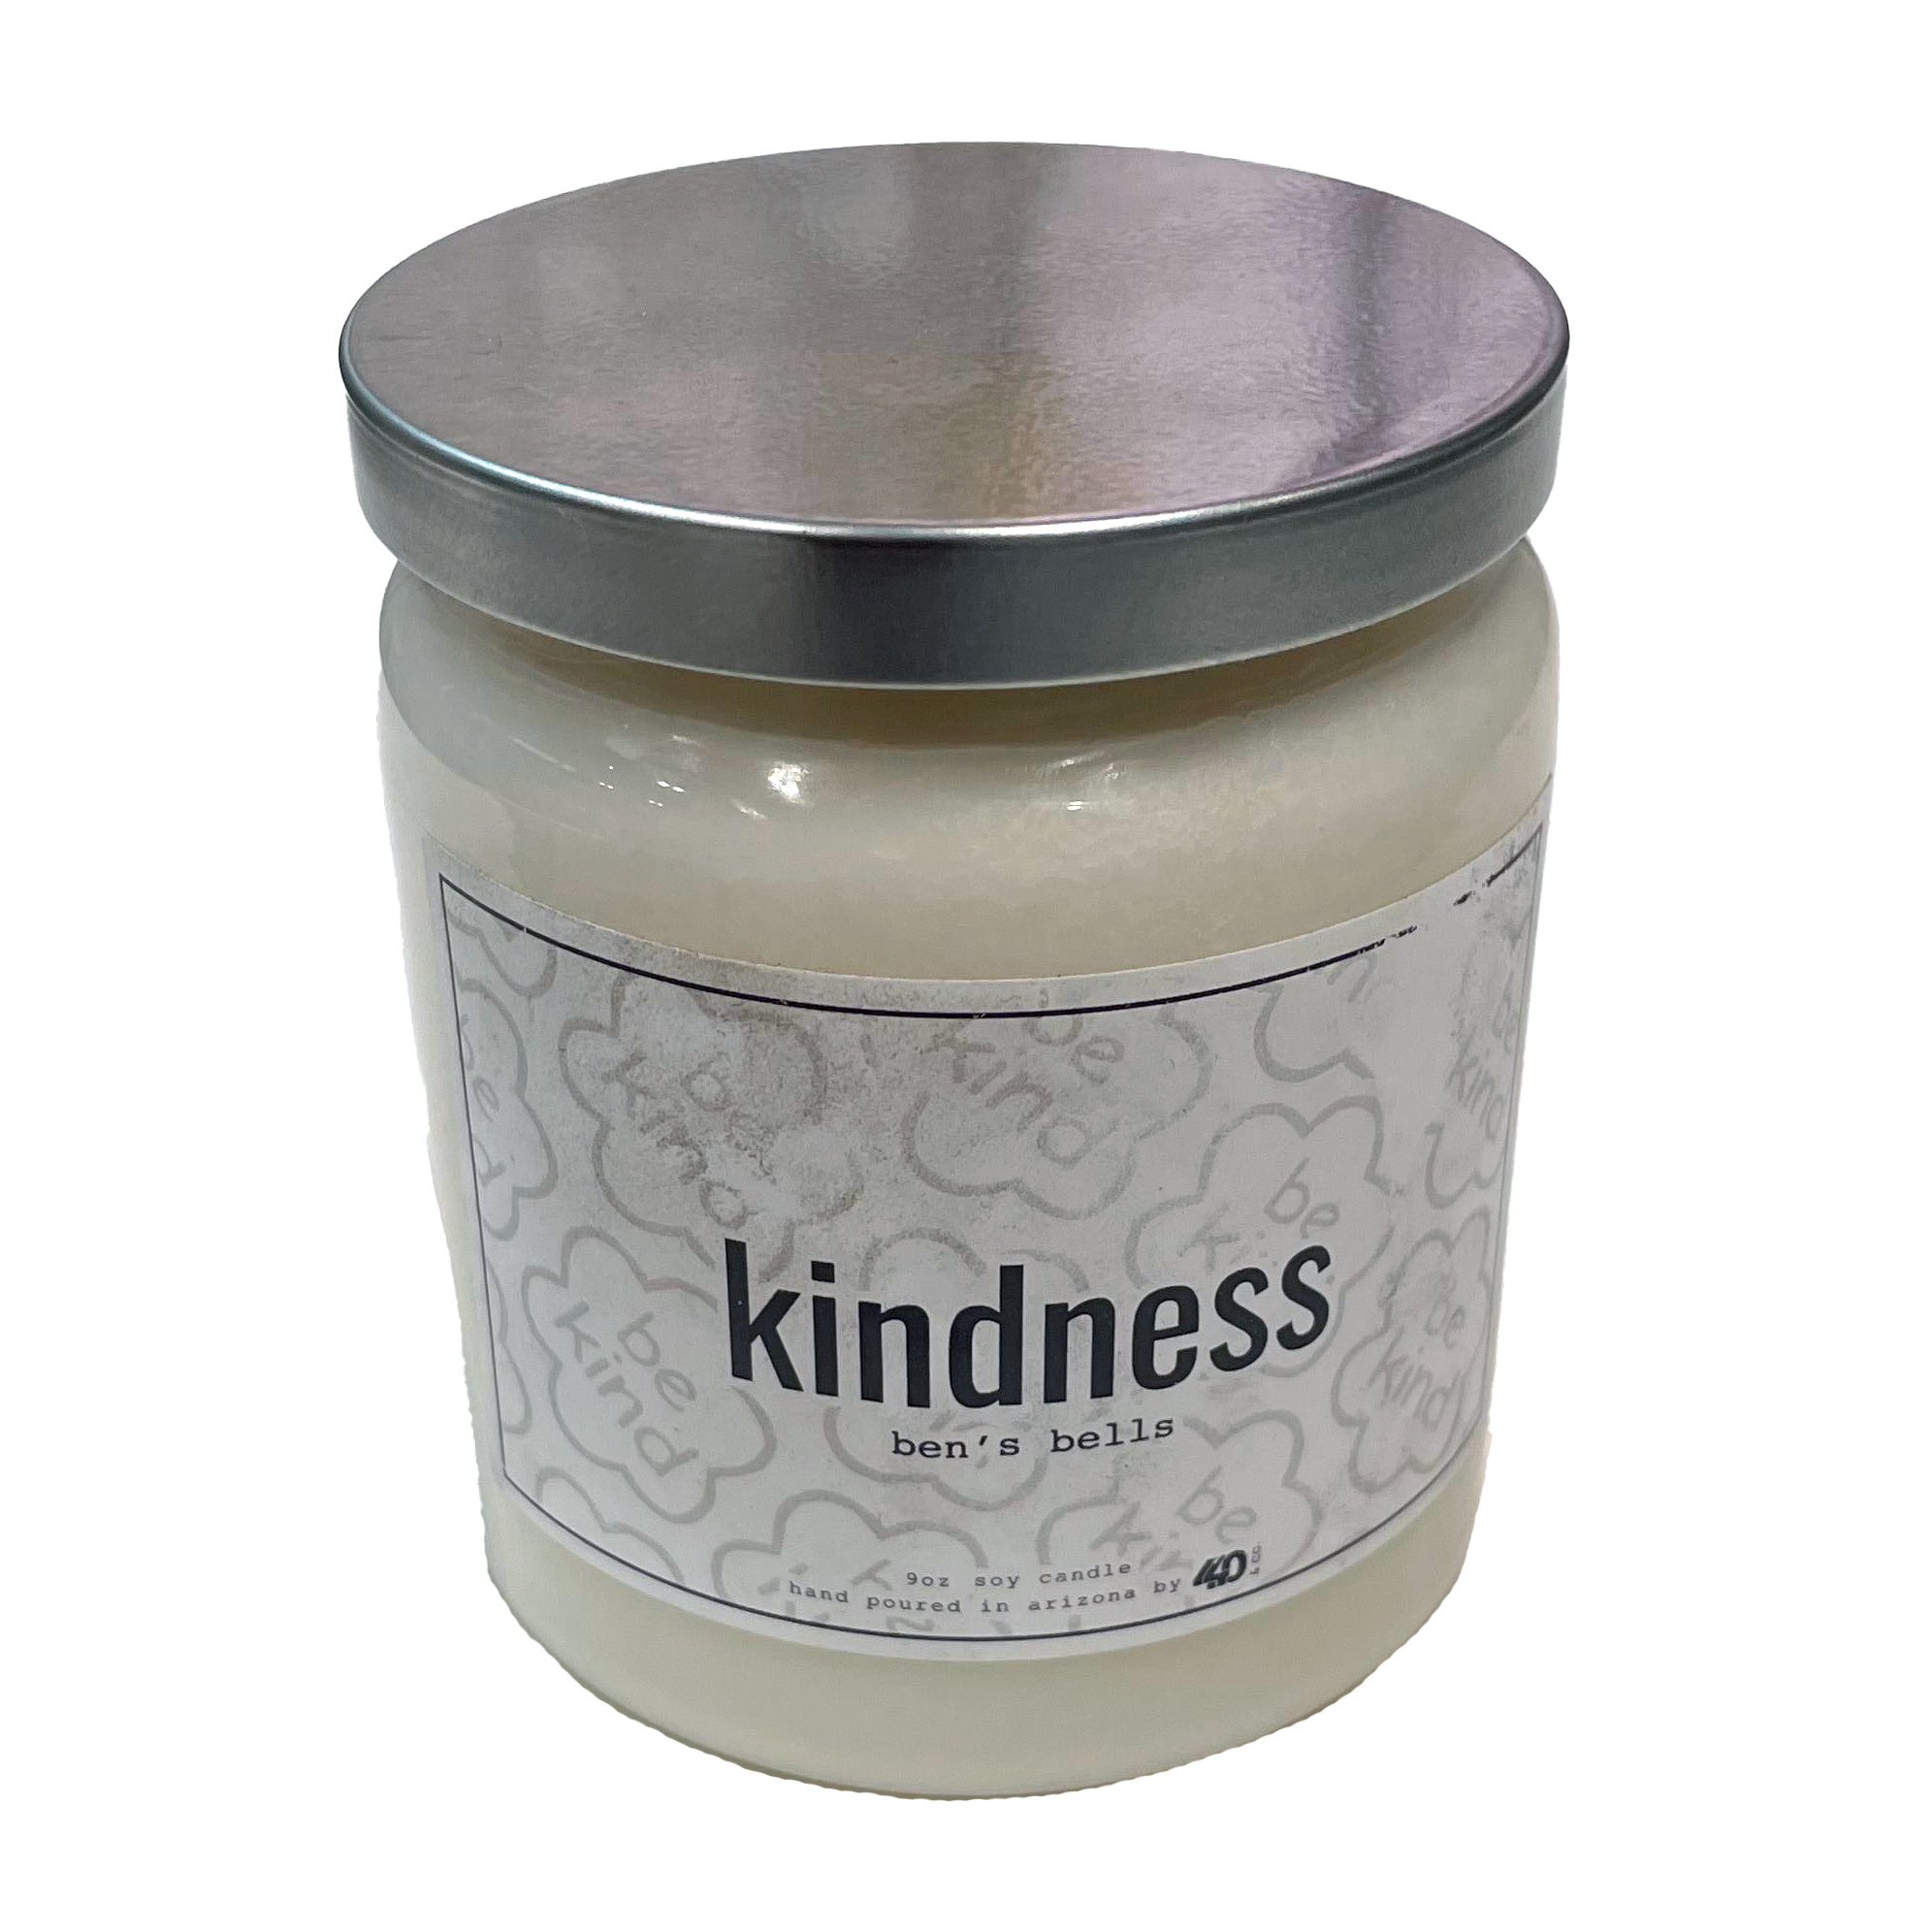 440 & Co. Candle- kindness 9oz jar